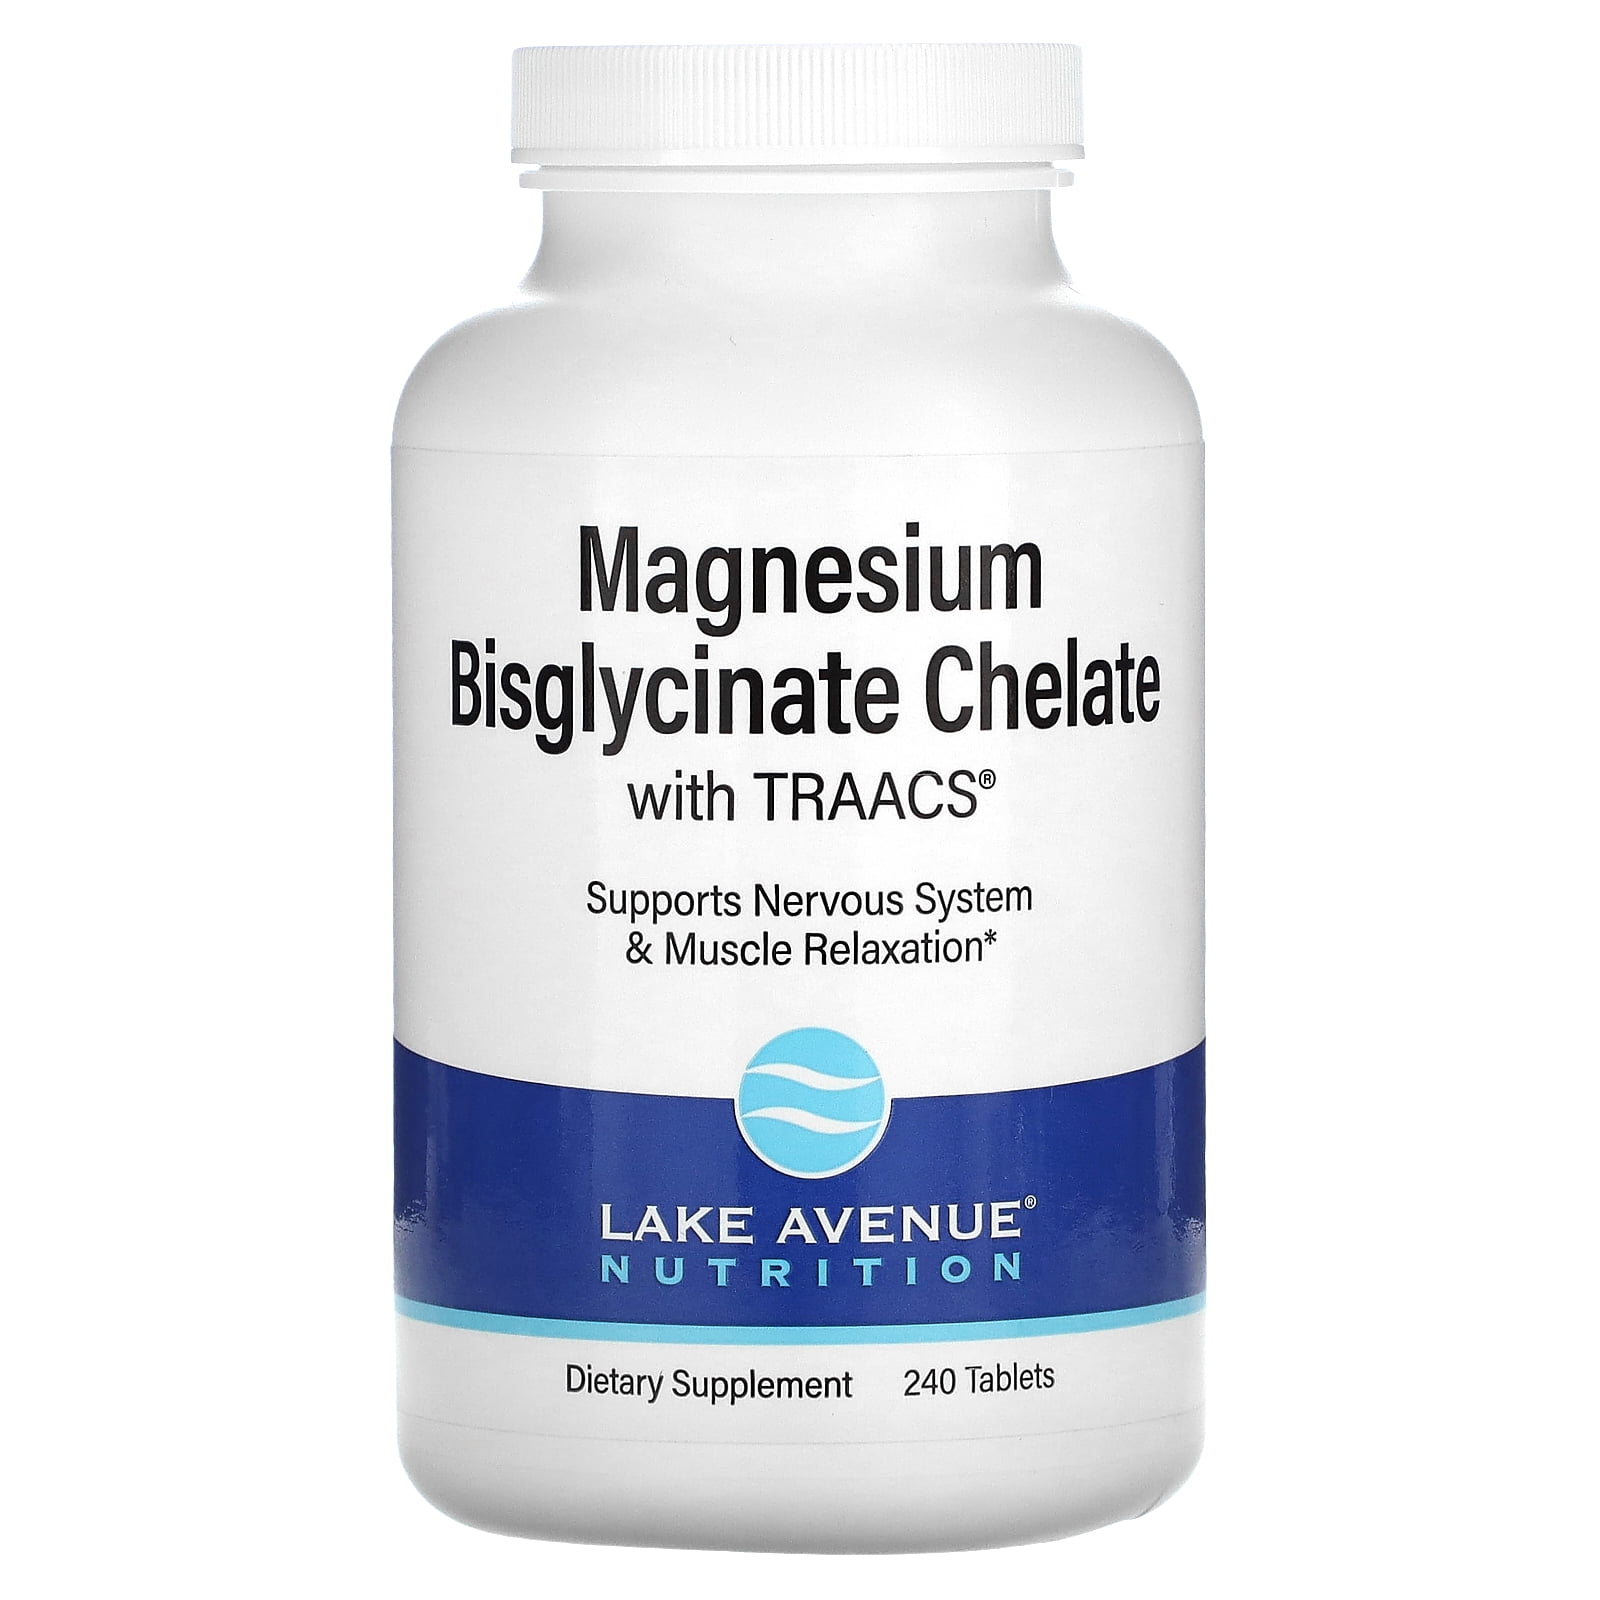 Senzu Health Magnesium Bisglycinate Traacs